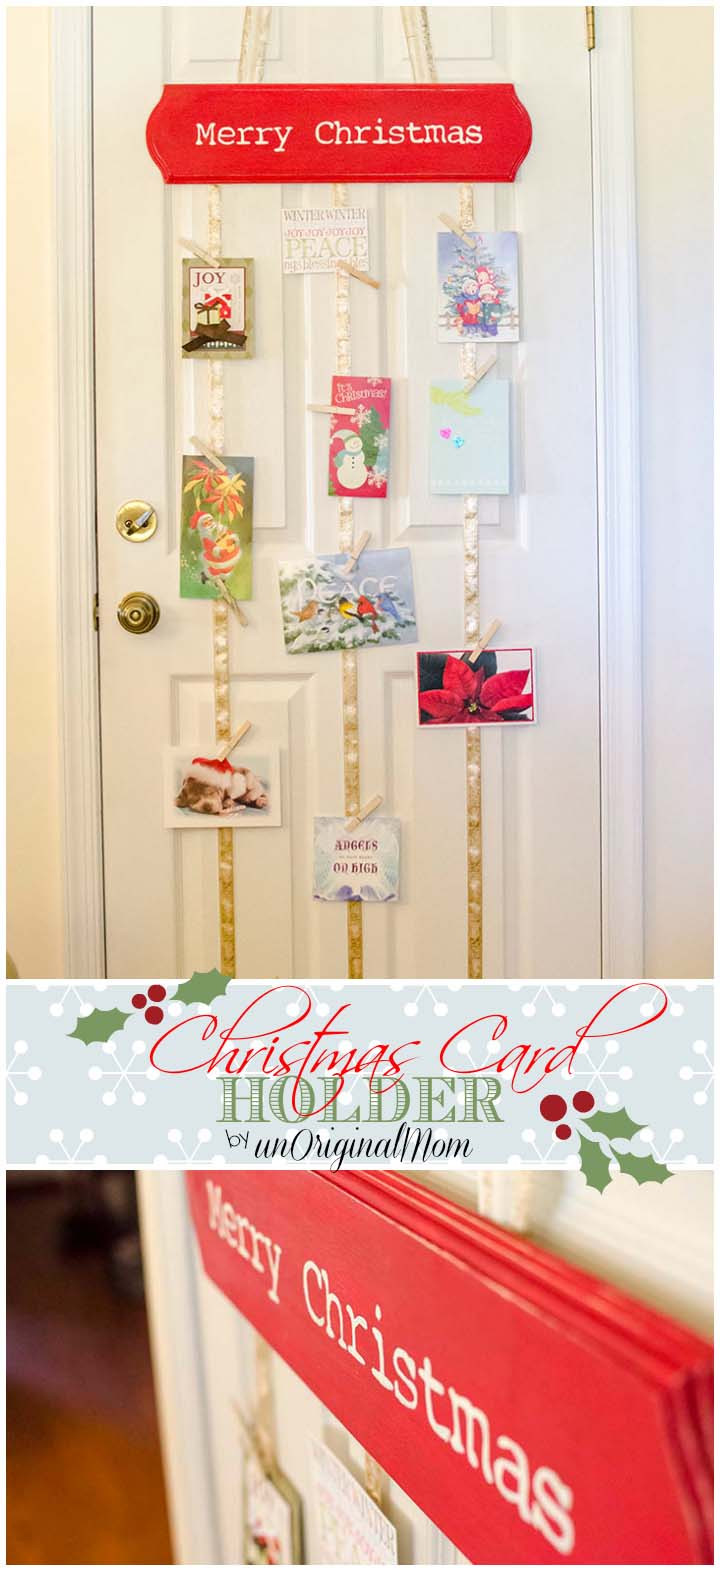 DIY Christmas Card Holder
 DIY Hanging Christmas Card Holder unOriginal Mom